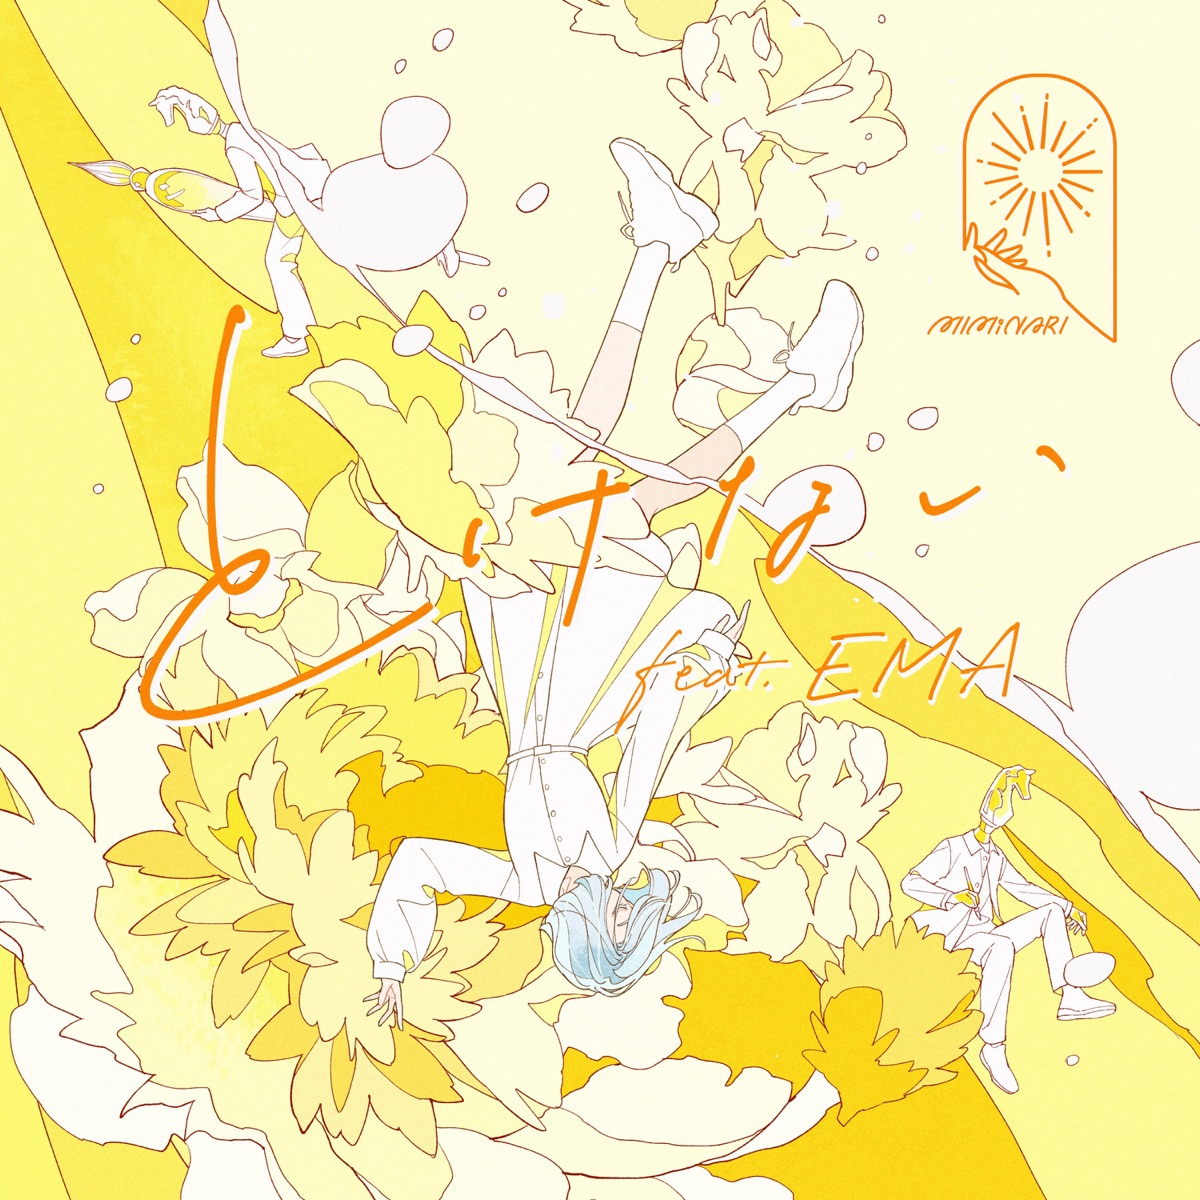 Cover art for『MIMiNARI - Tokenai (feat. EMA)』from the release『Tokenai (feat. EMA)』